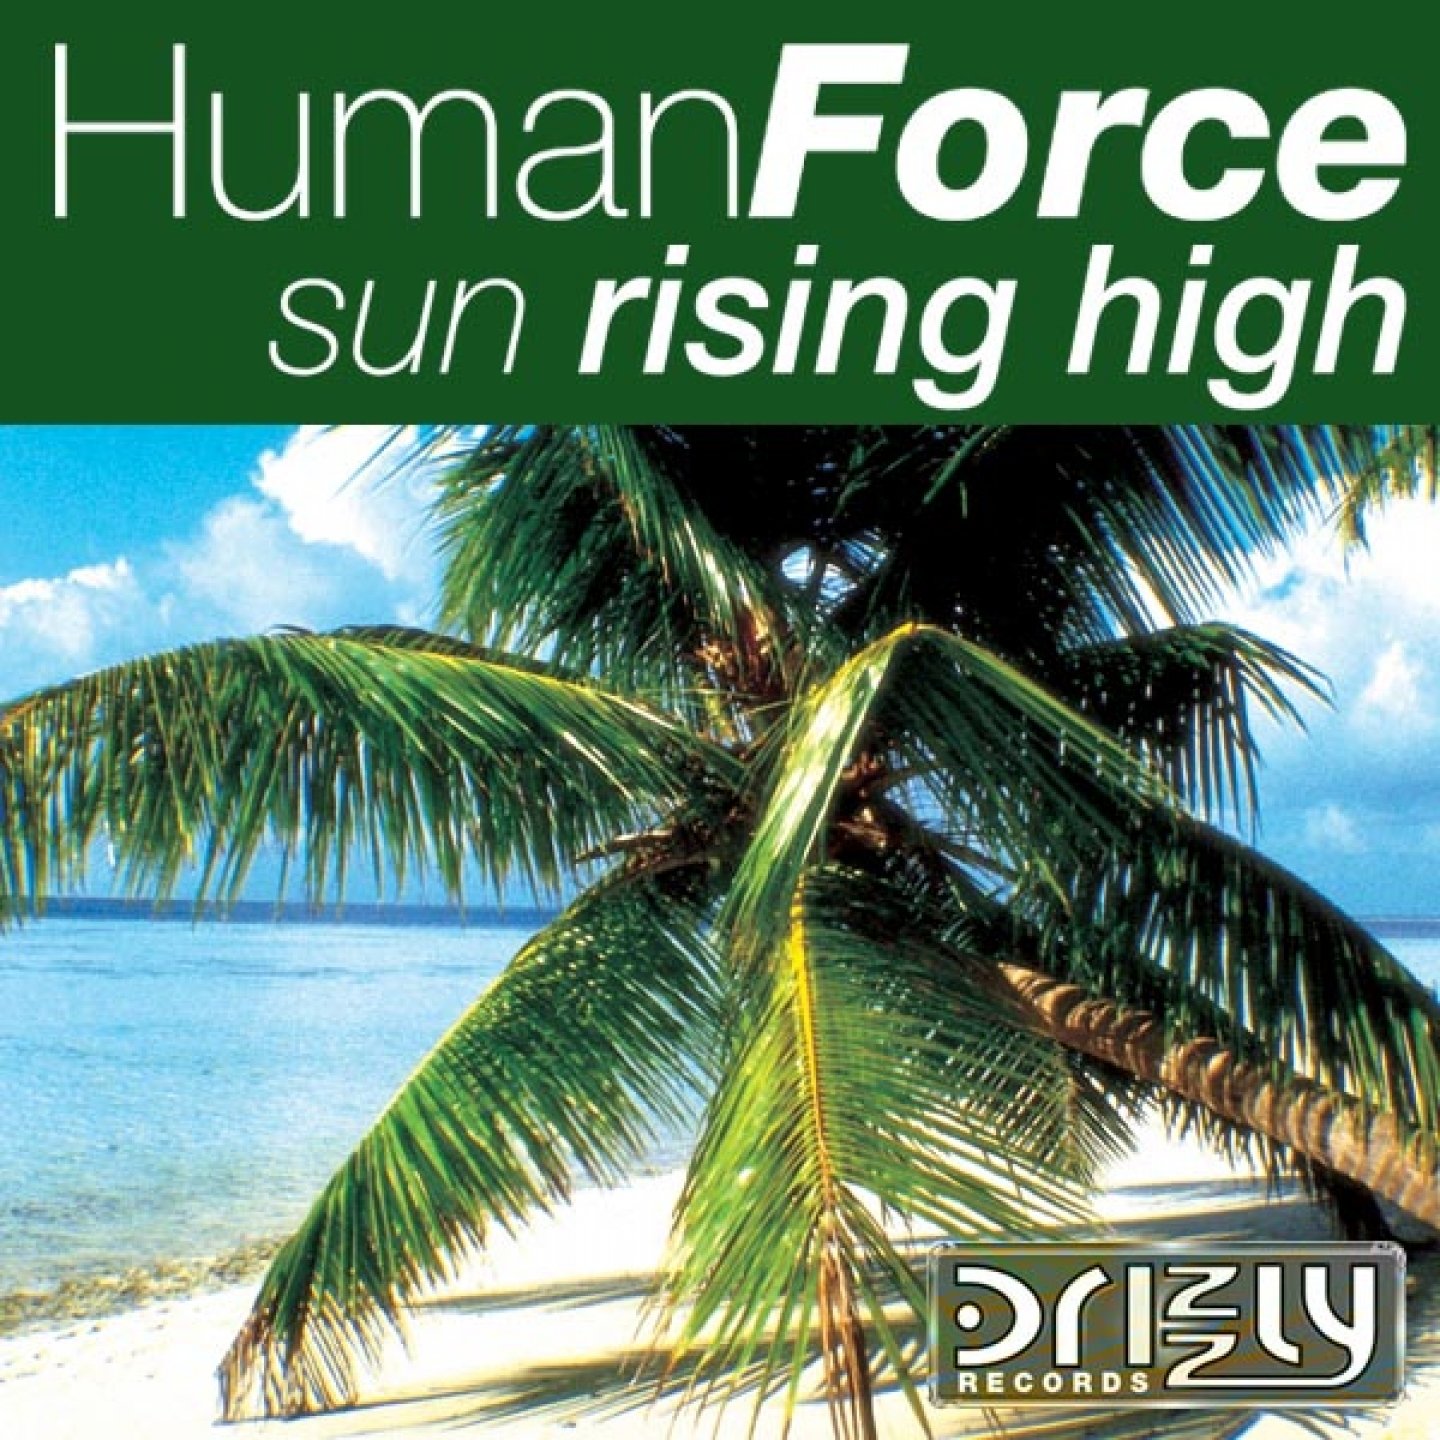 Human Force - Sun Rising High (Vocal Trance Mix) фото